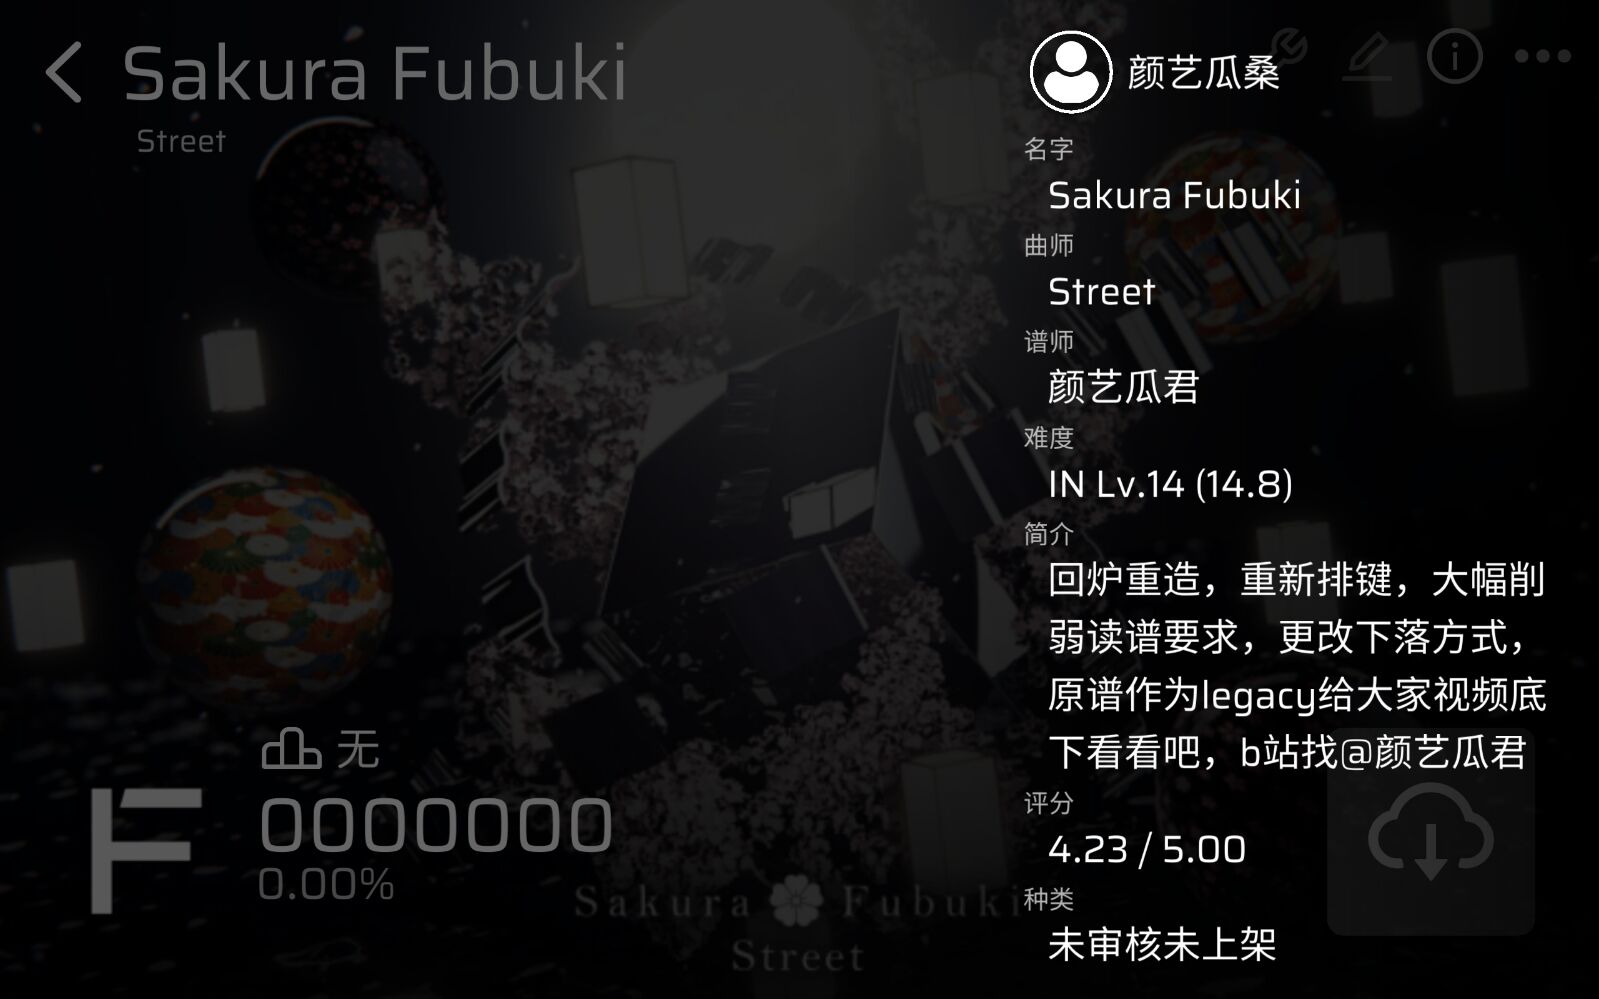 3.Sakura Fubuki